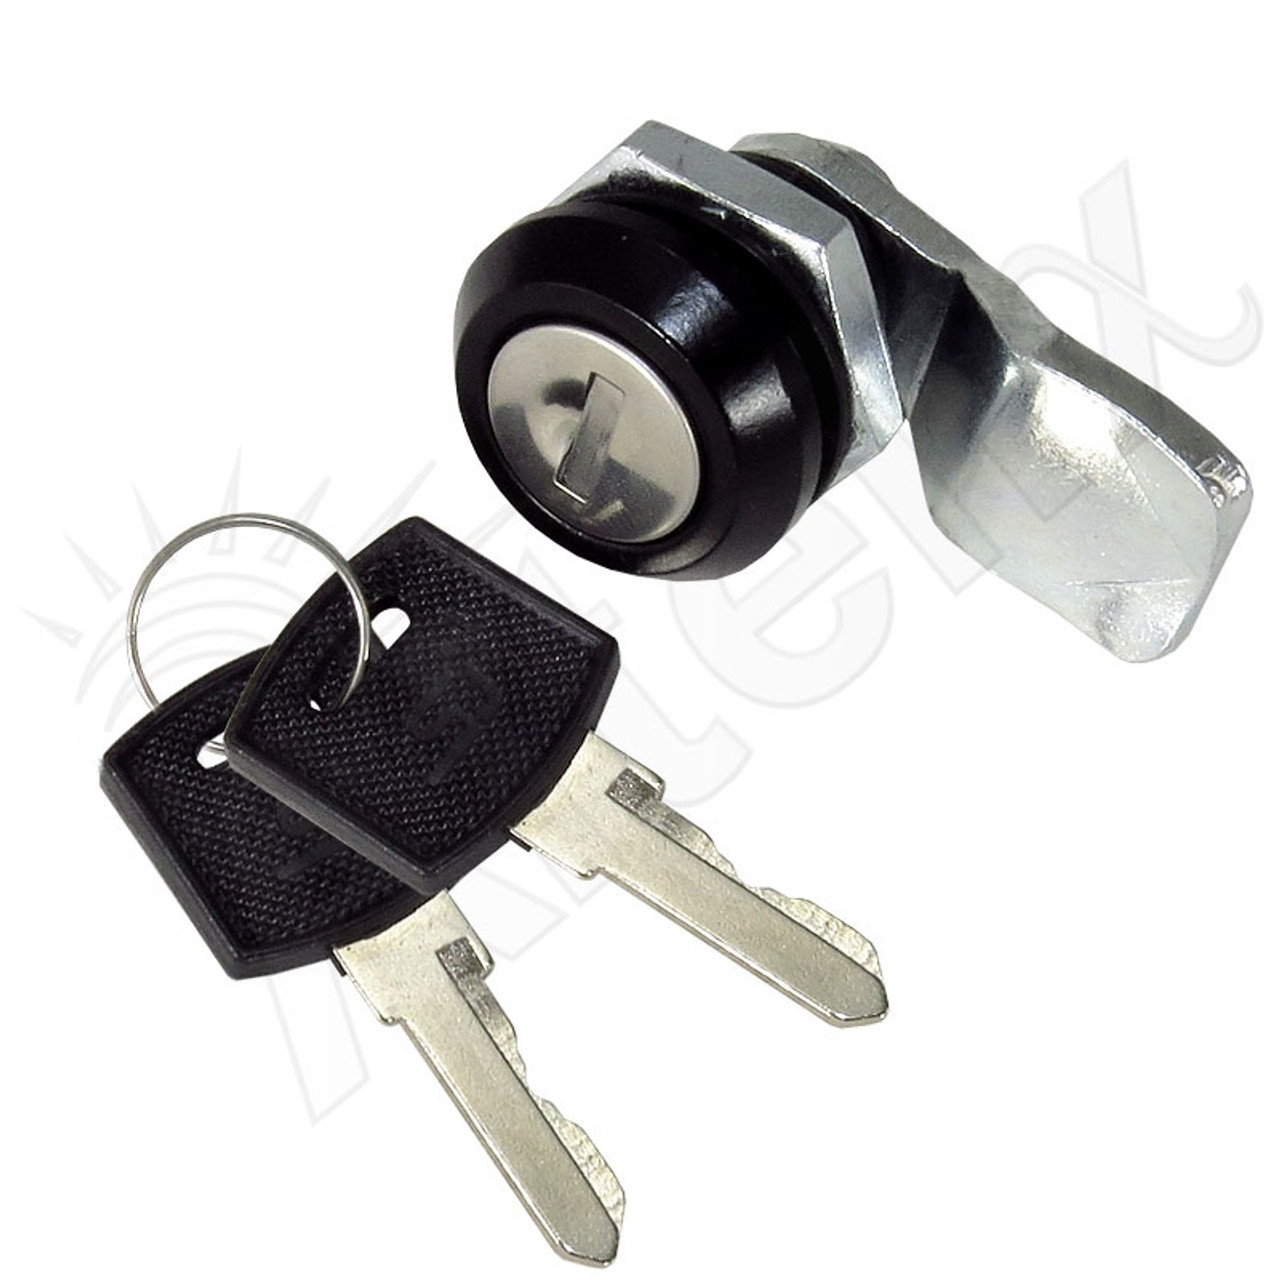 lock and key set